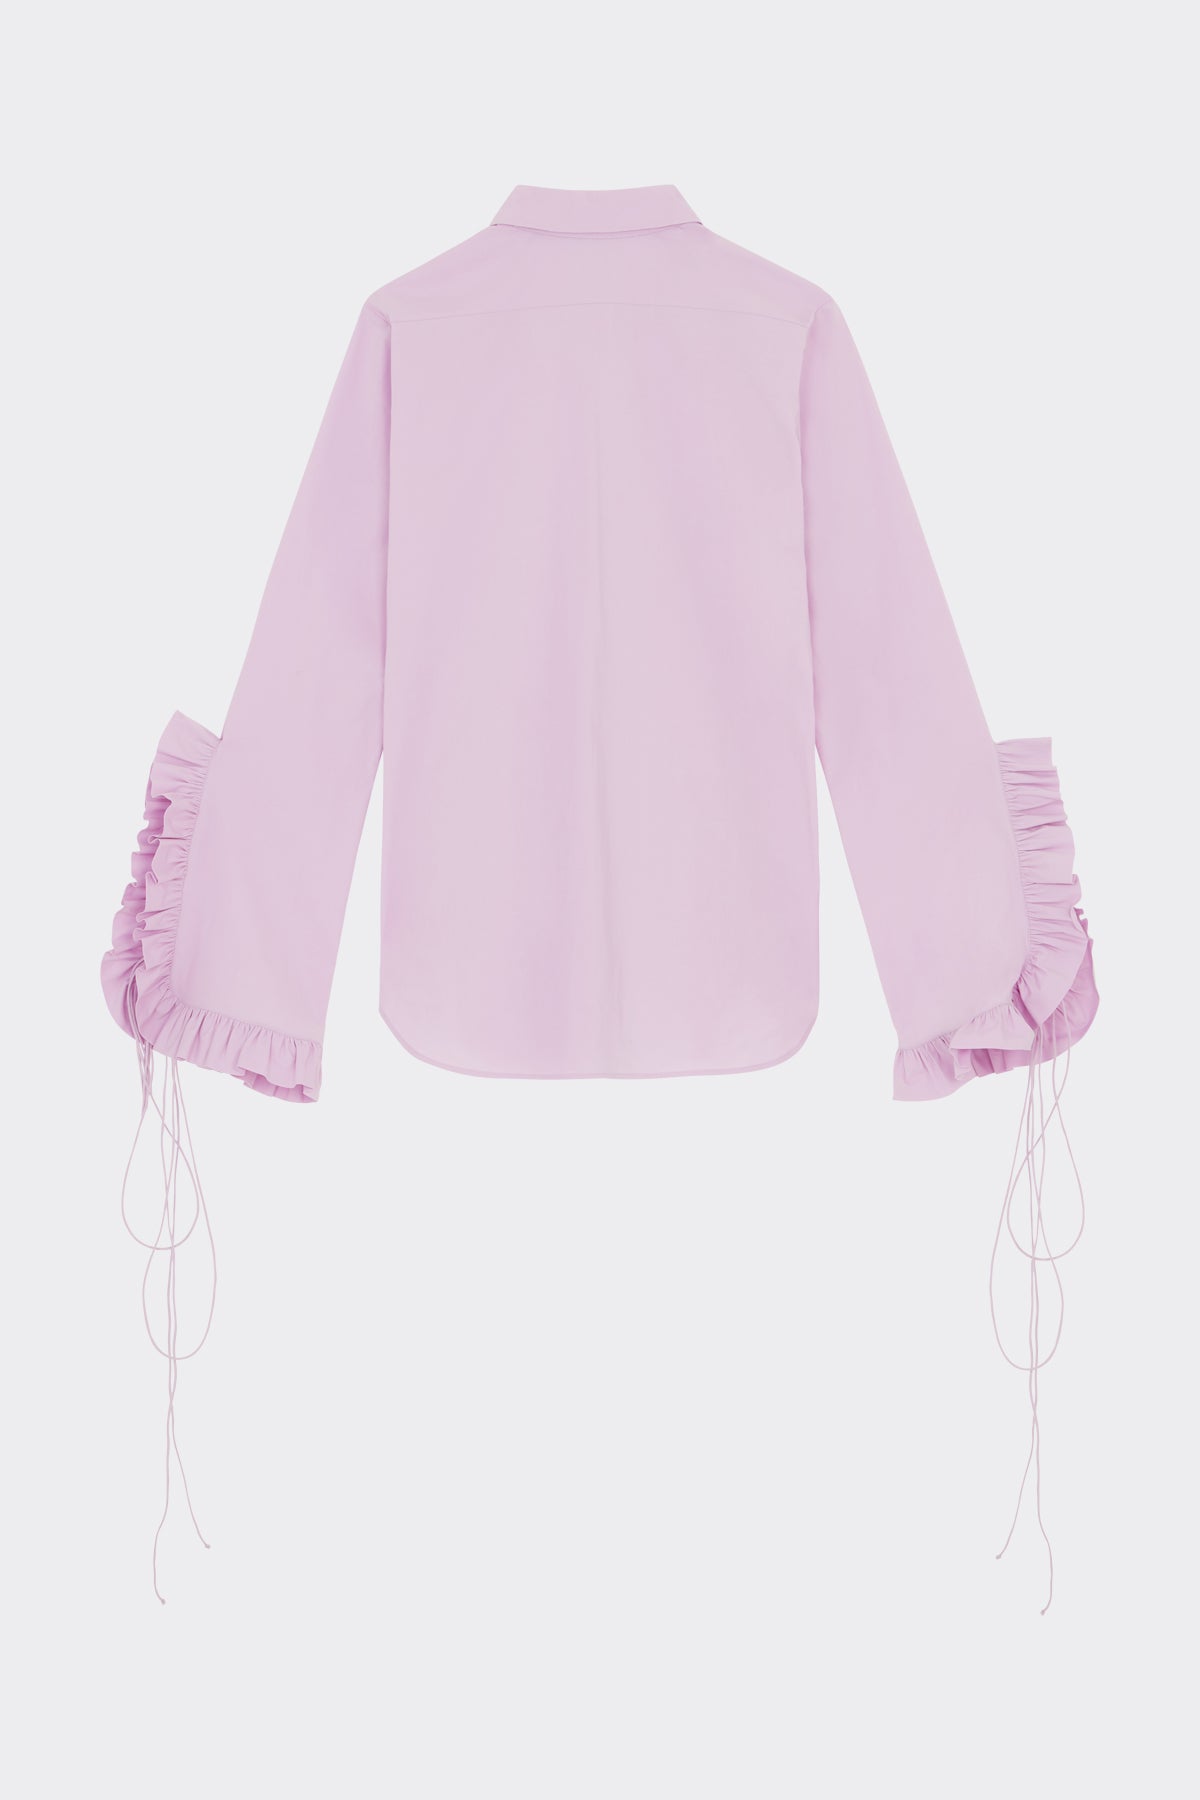 Pope Shirt in Lavender Mist| Noon by Noor